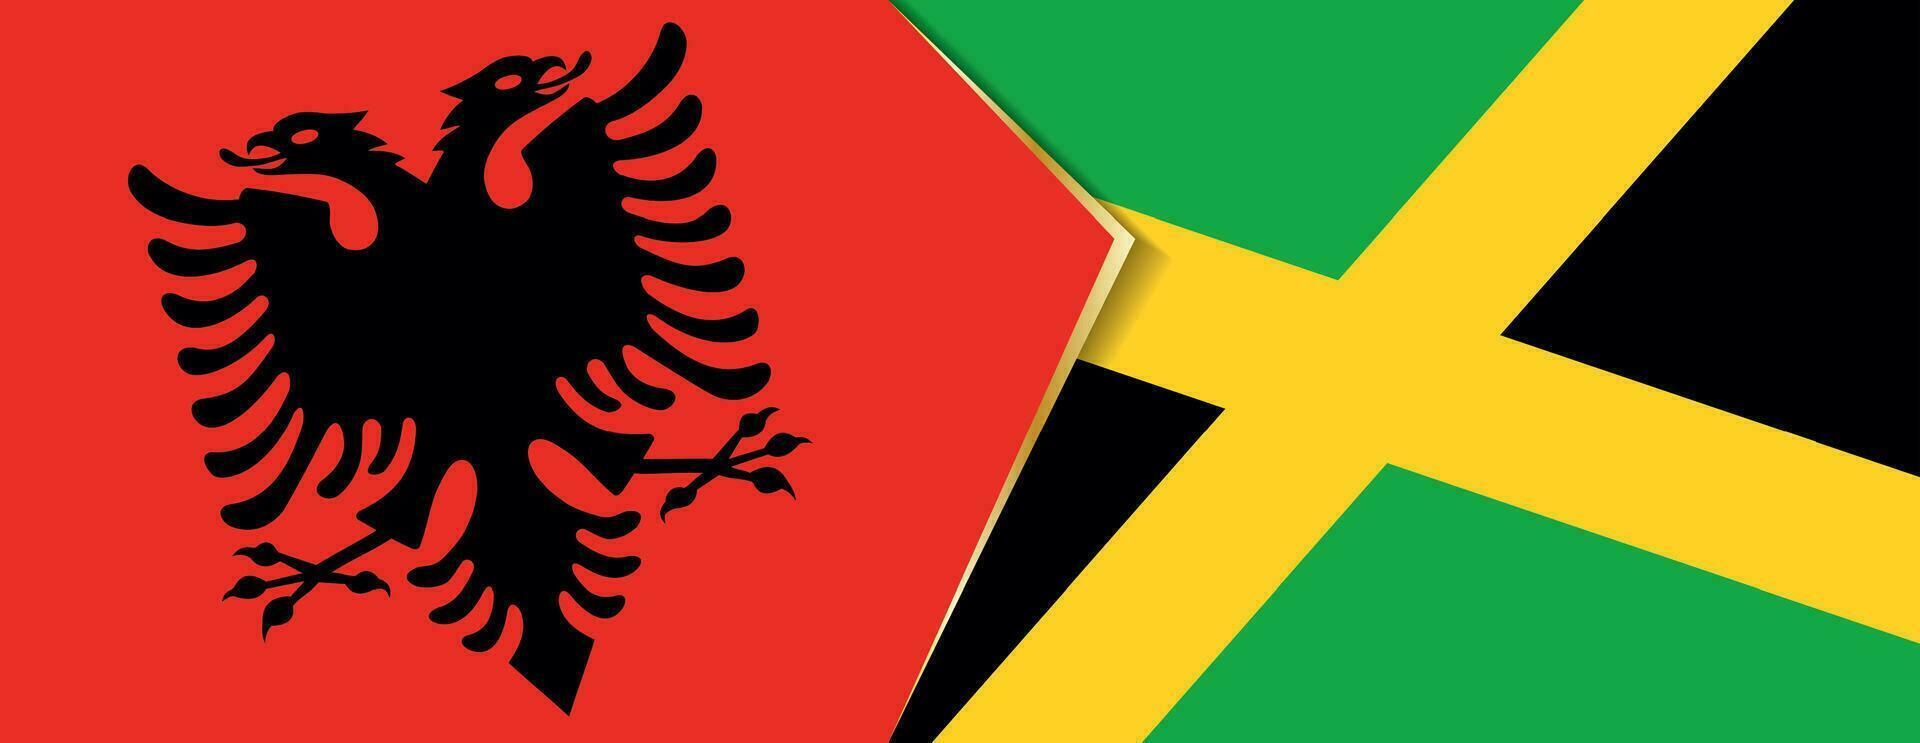 albania och jamaica flaggor, två vektor flaggor.